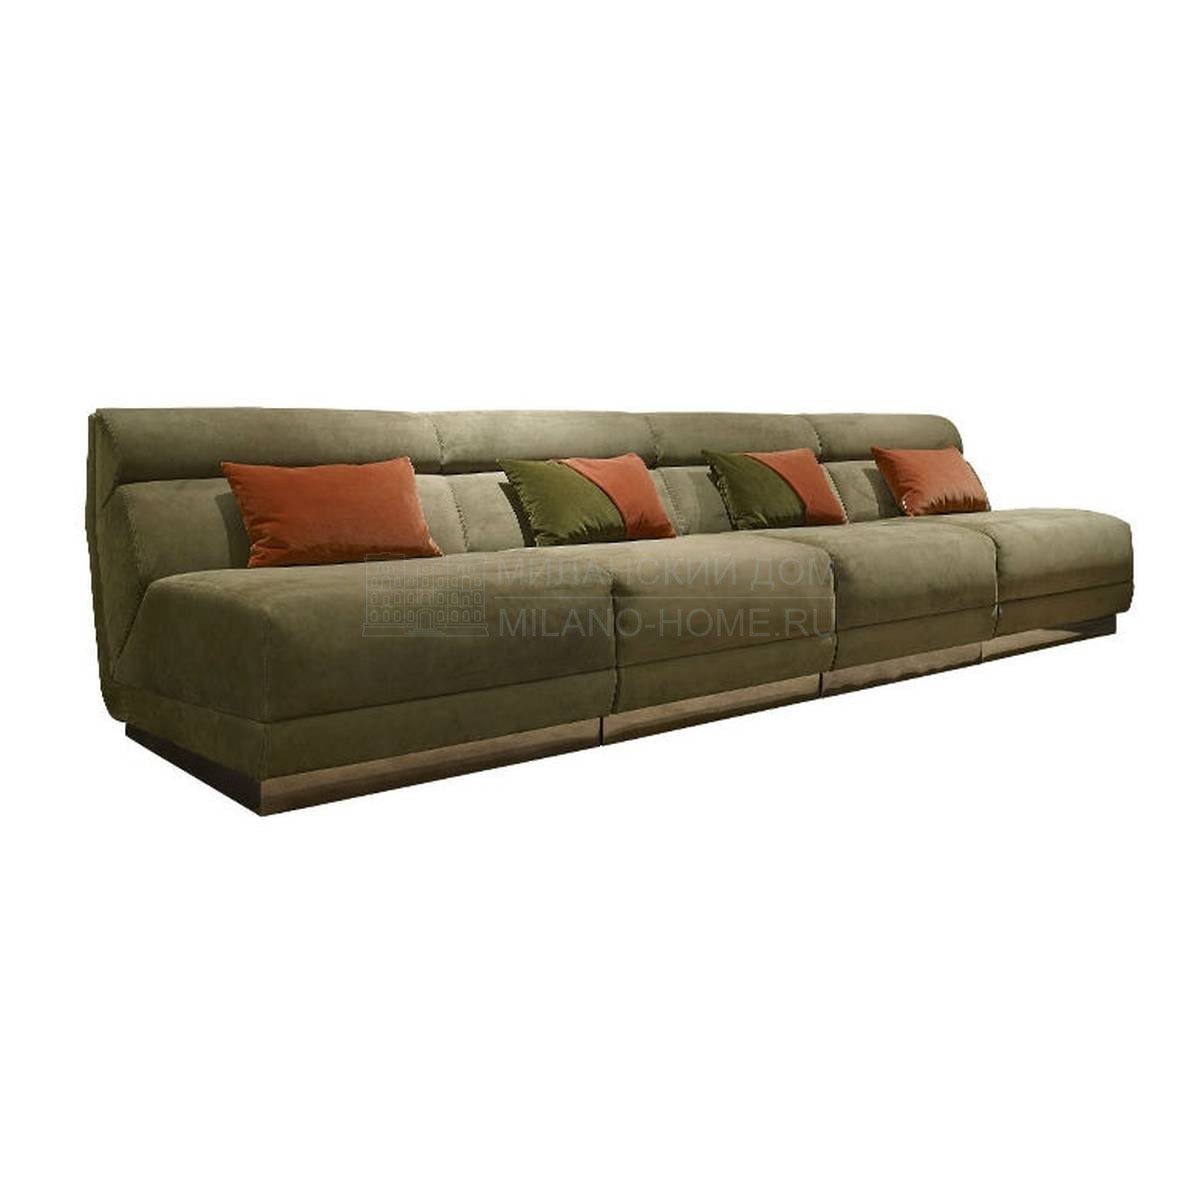 Прямой диван Appia sofa из Италии фабрики SOFTHOUSE